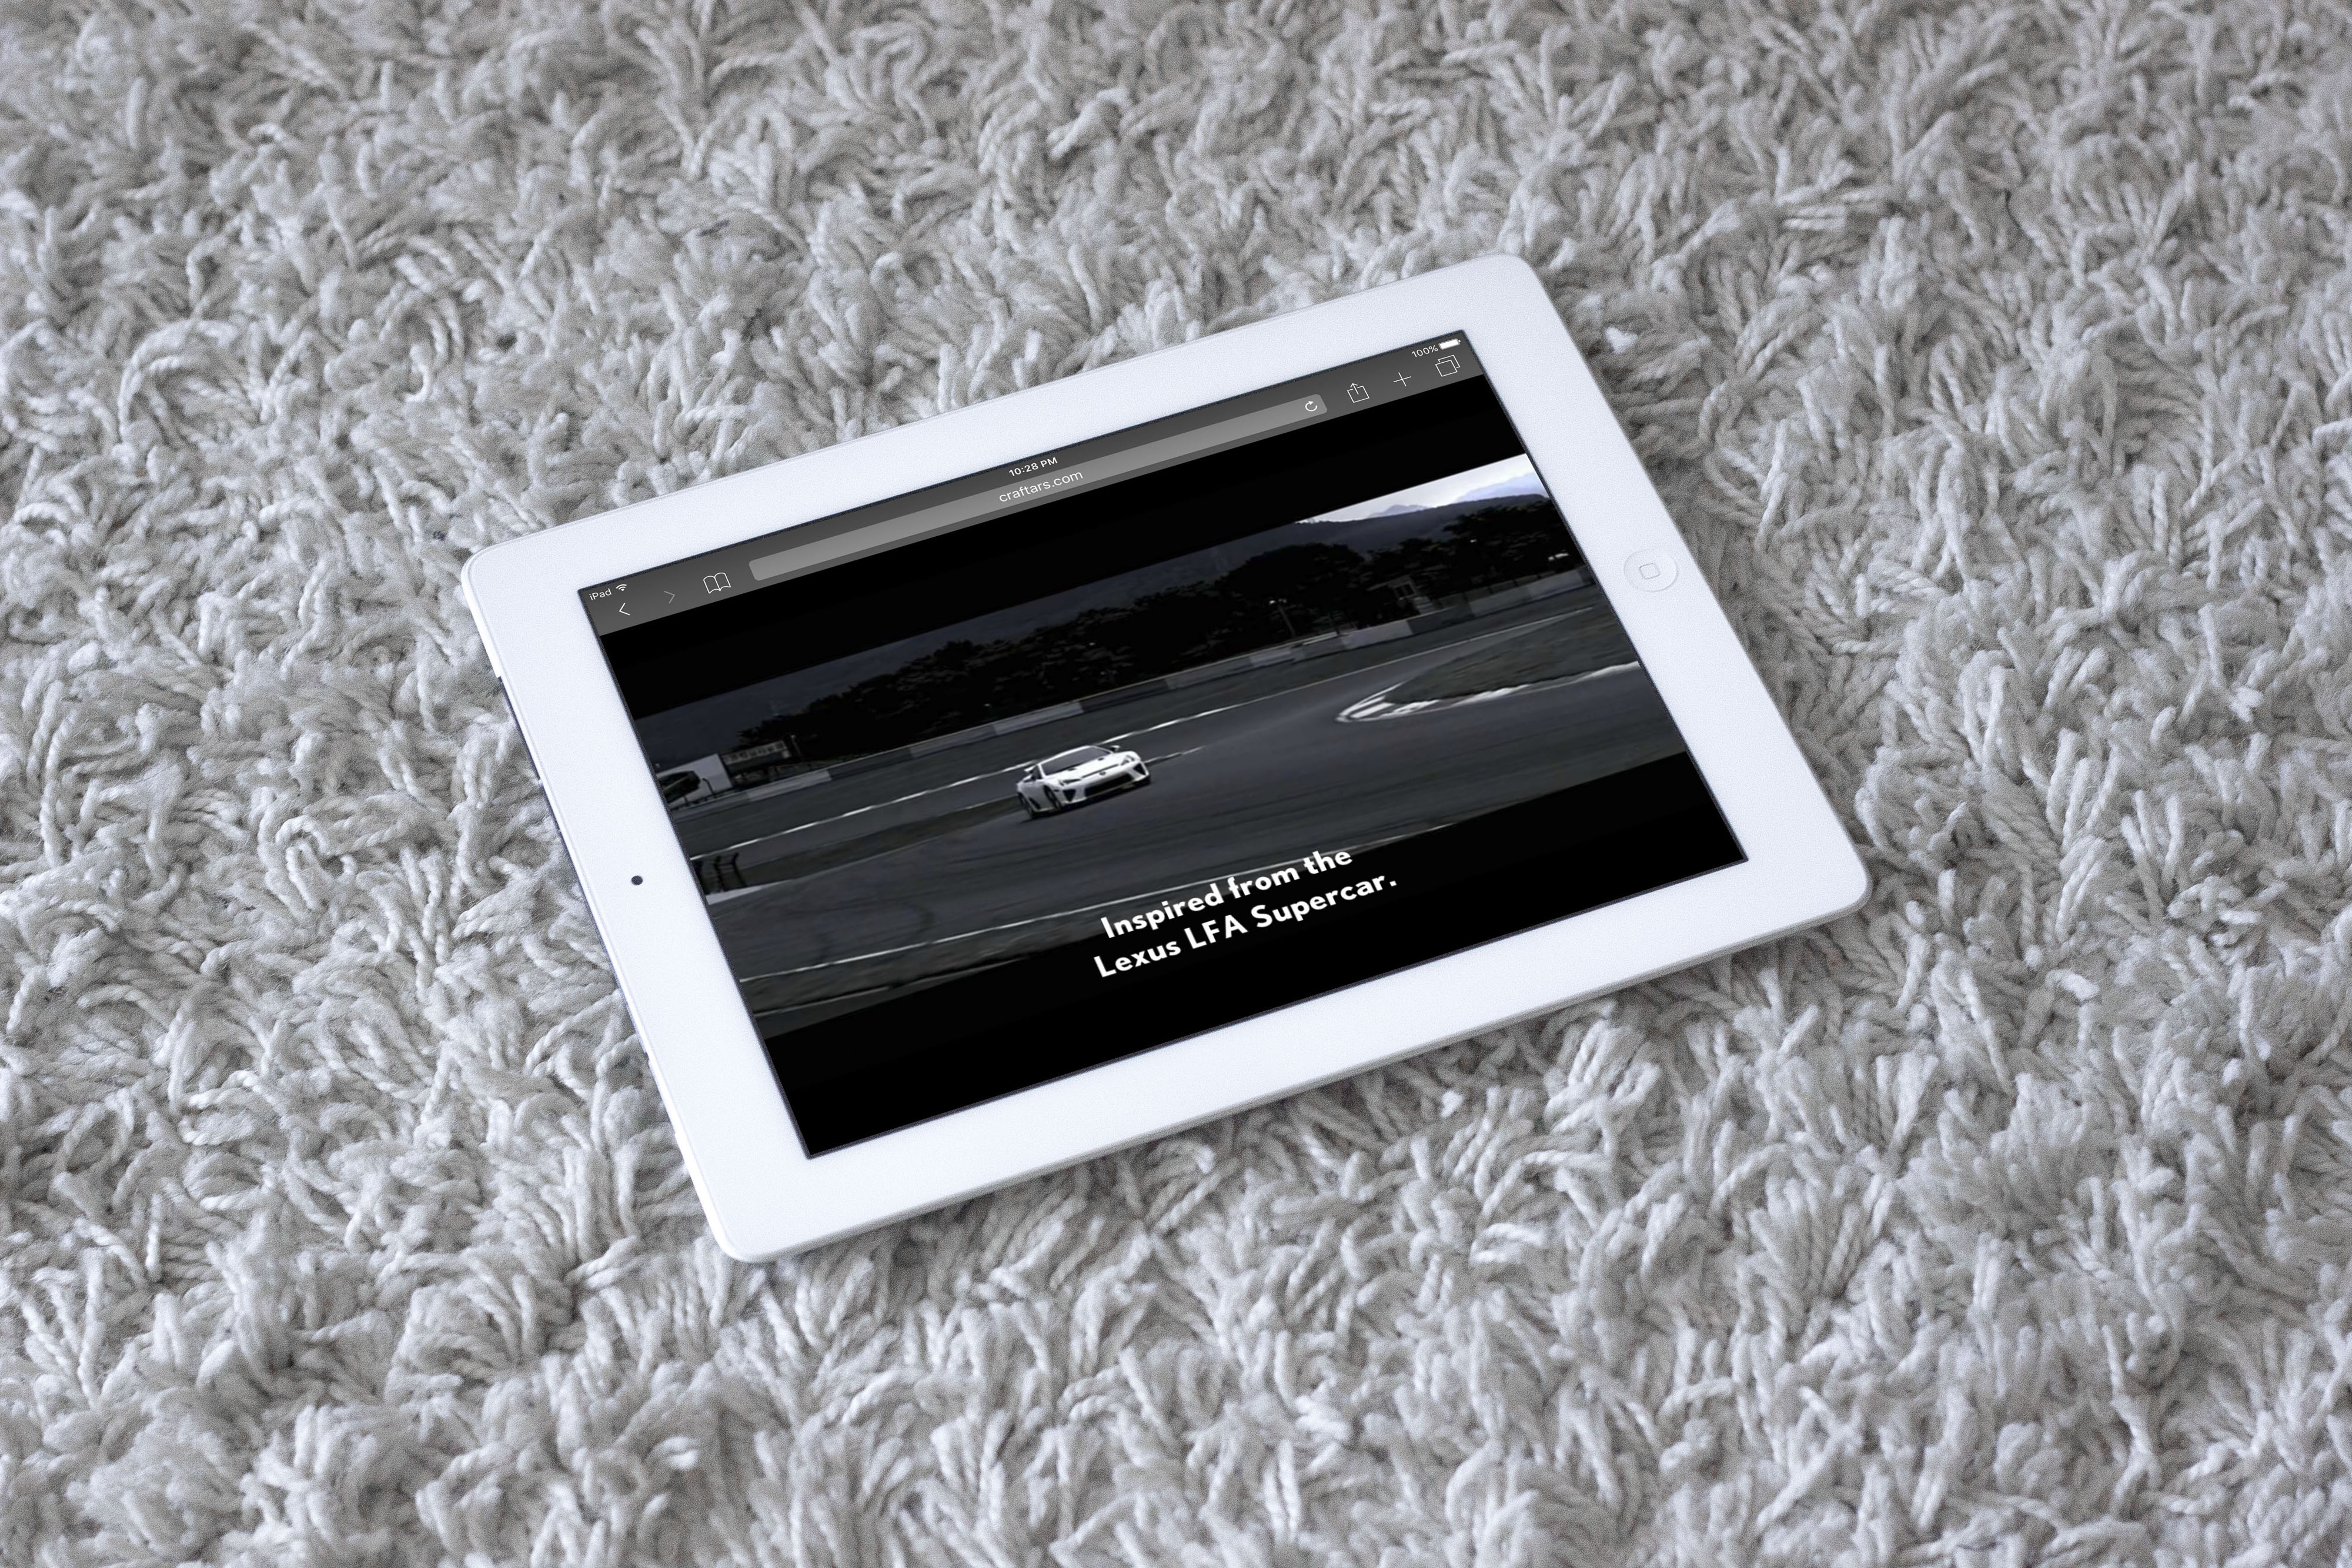 Lexus IS250 HTML5 interactive ad